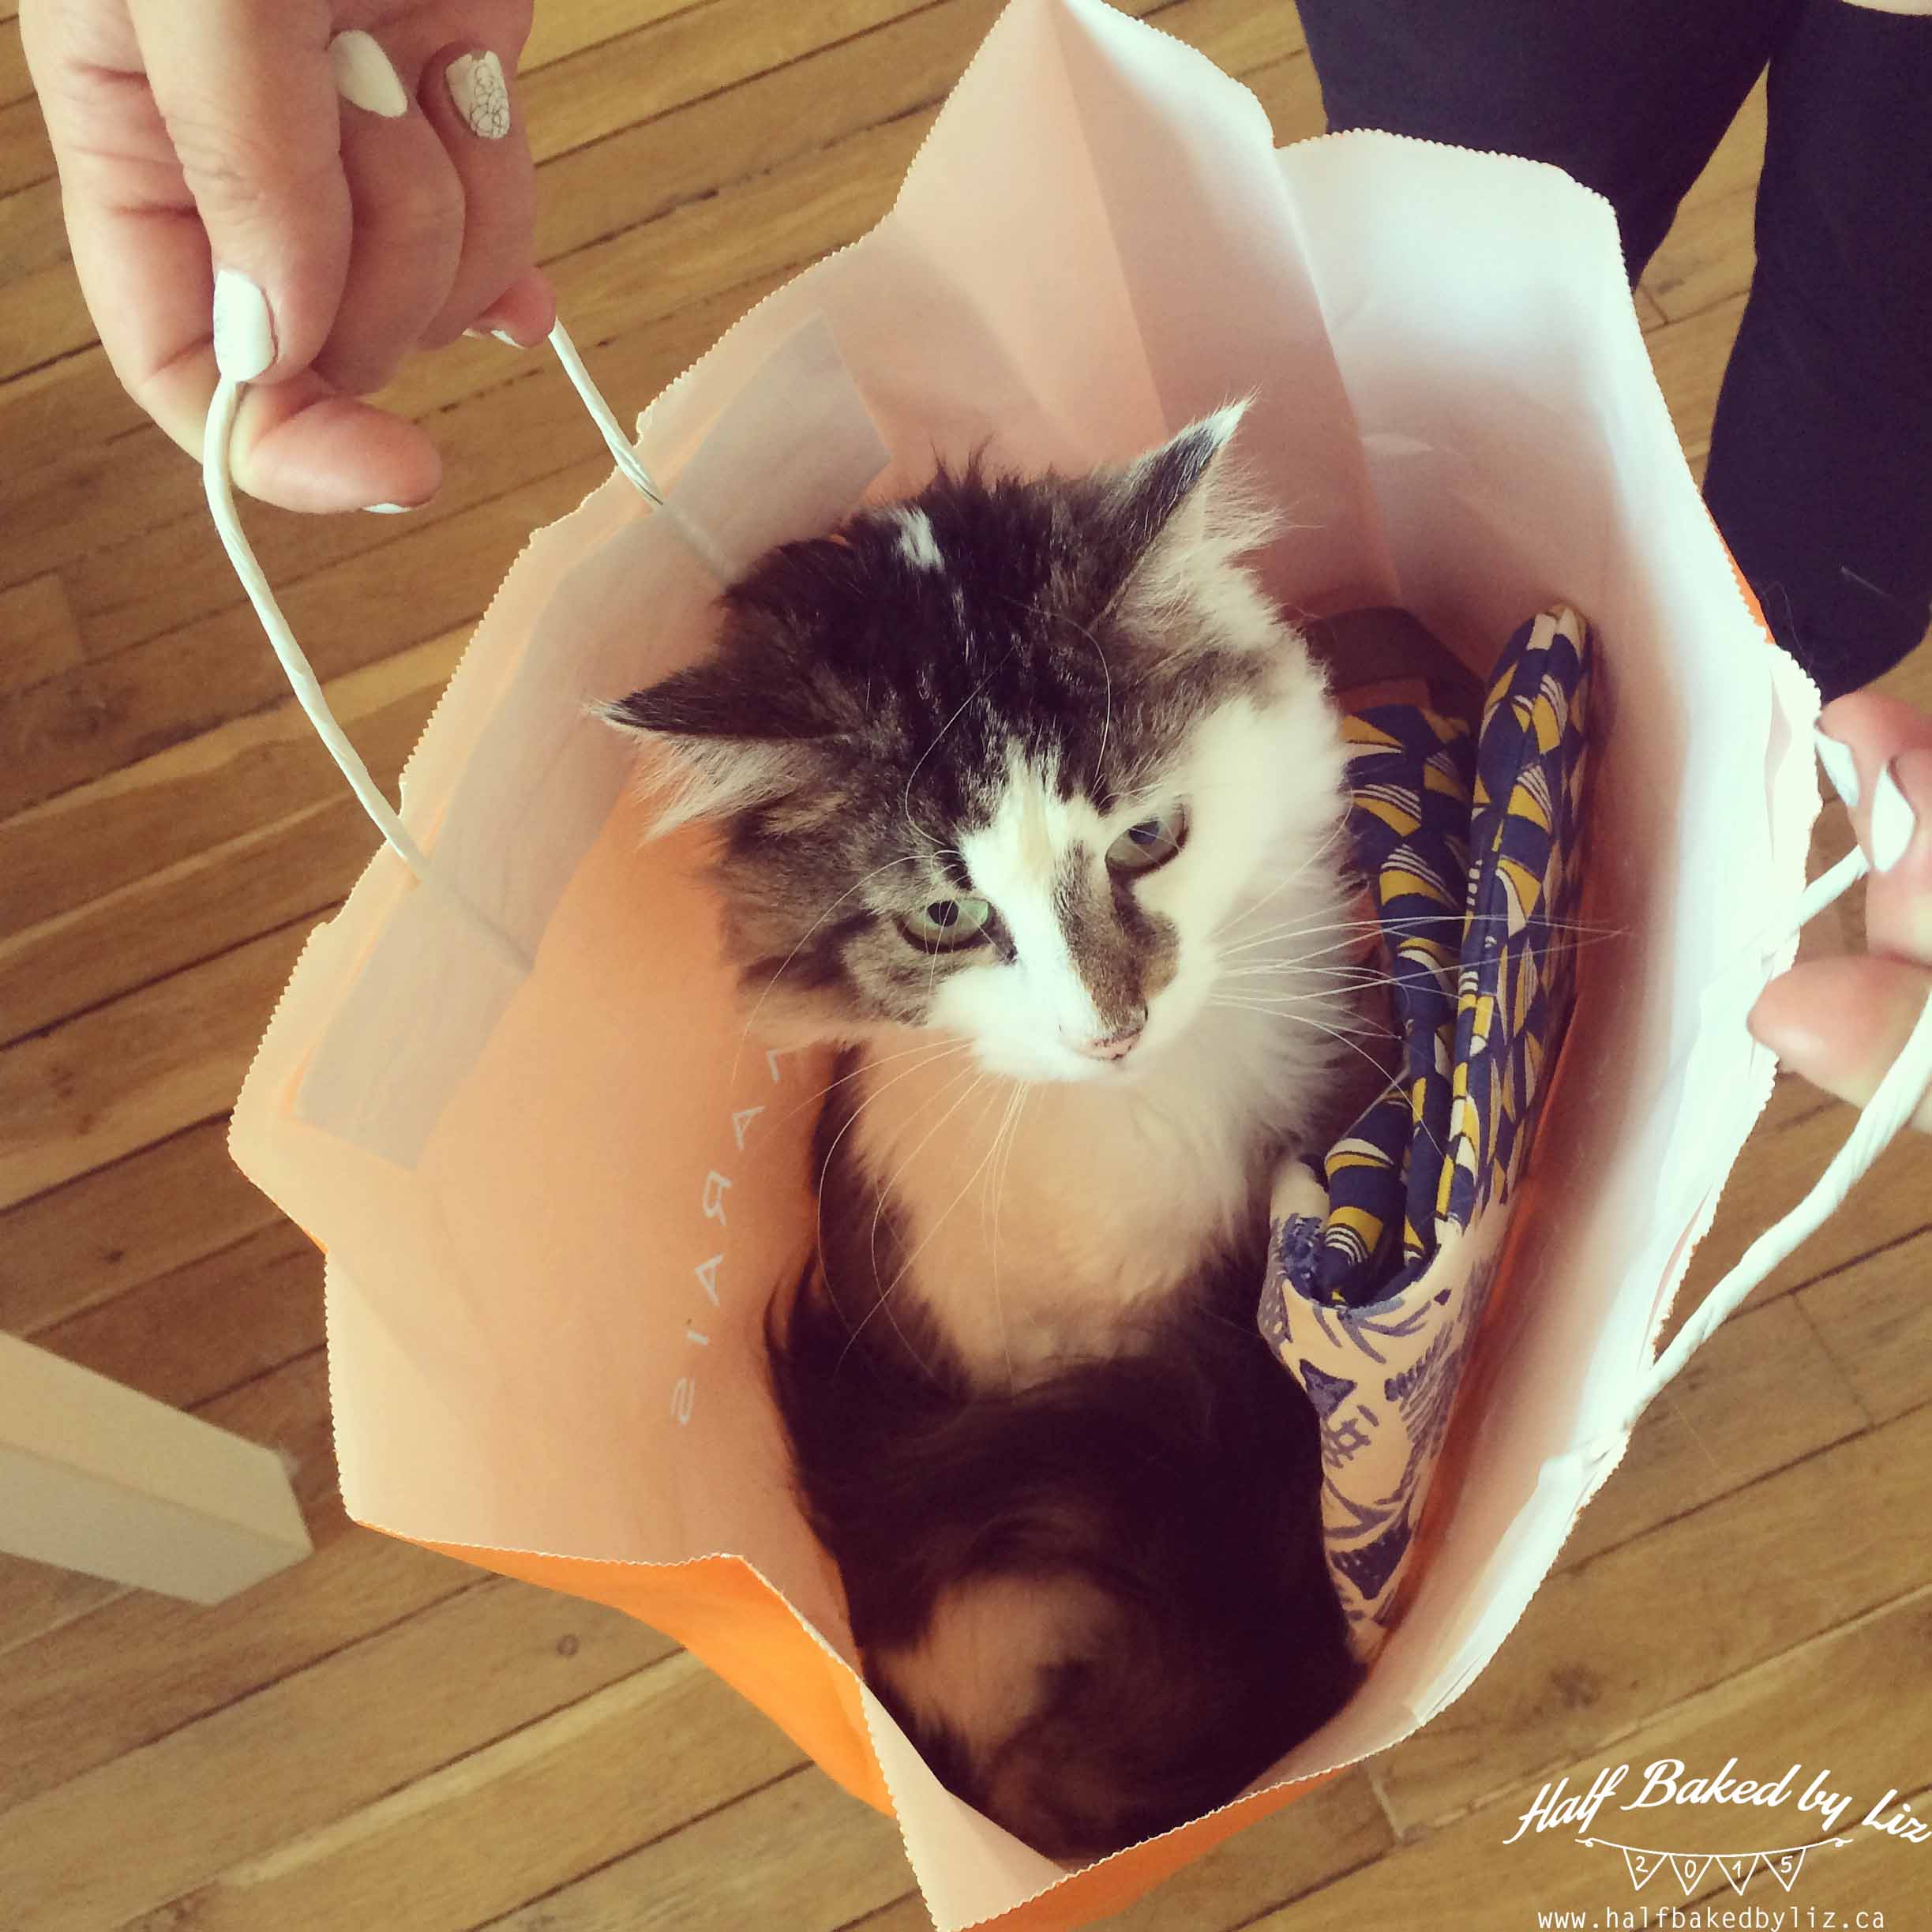 2 - Cat in the Bag